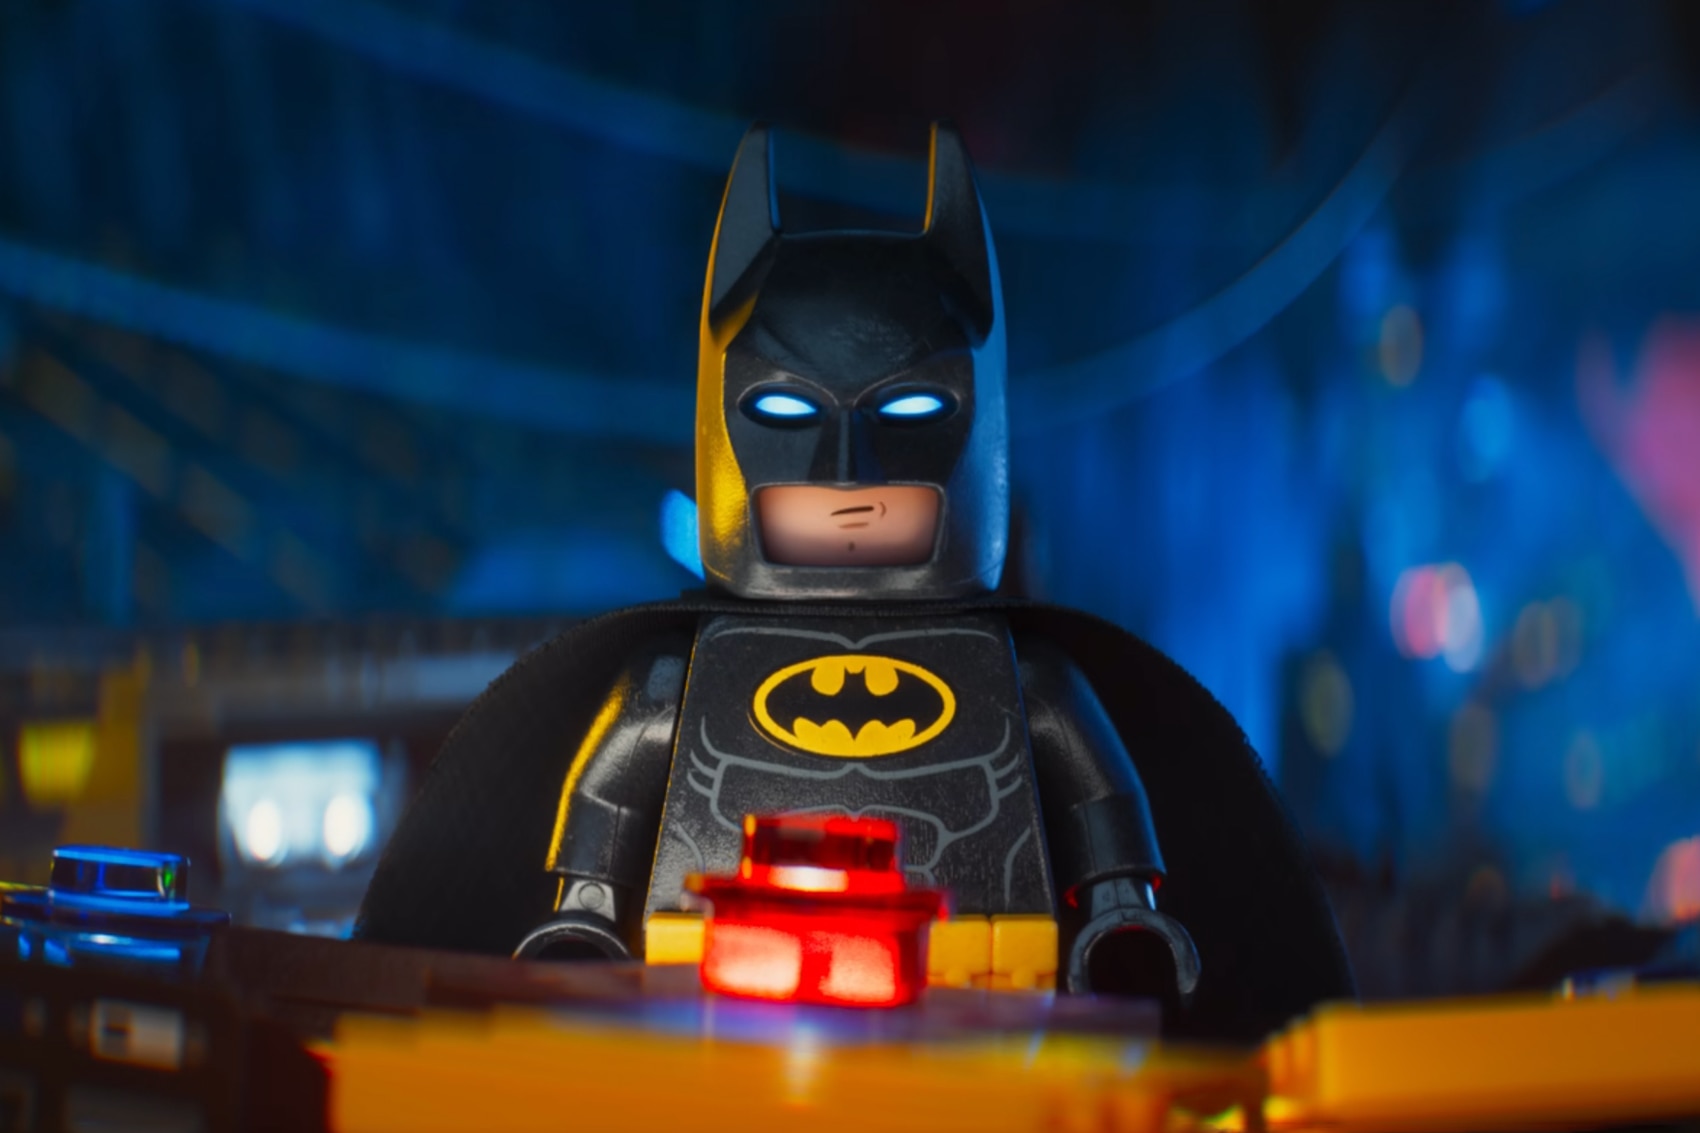 Lego Movie's Batman Is Getting His Own Movie